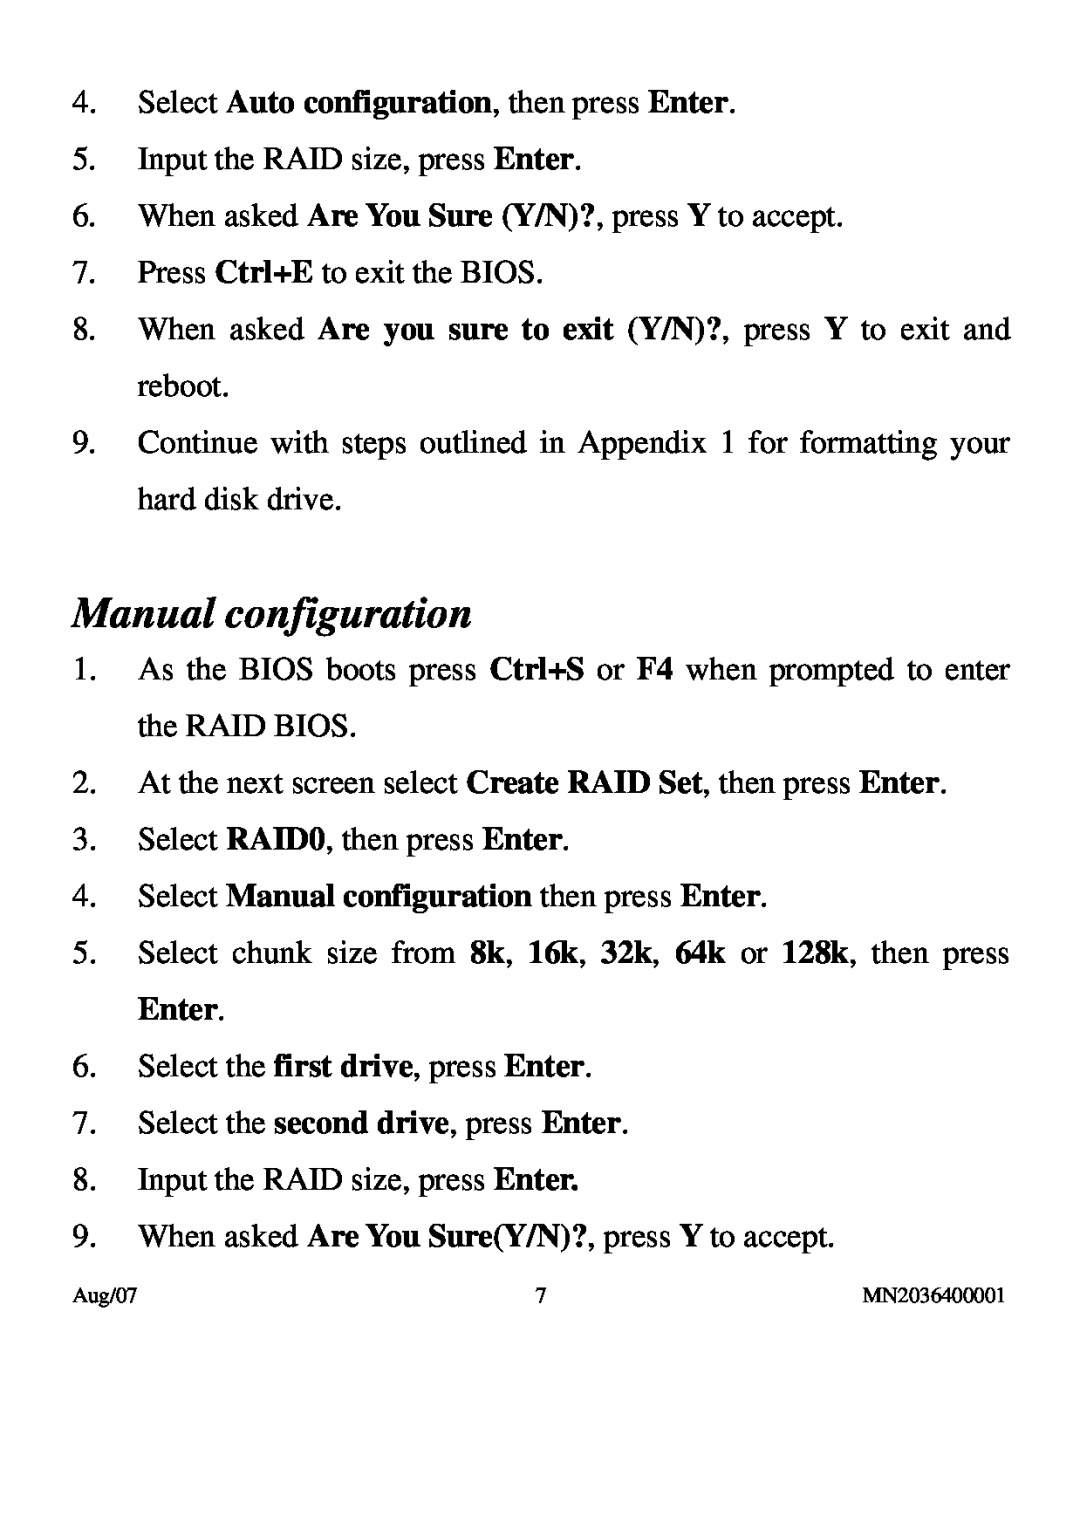 PNY P-DSA2-PCIE-RF user manual Manual configuration, Select Auto configuration, then press Enter 